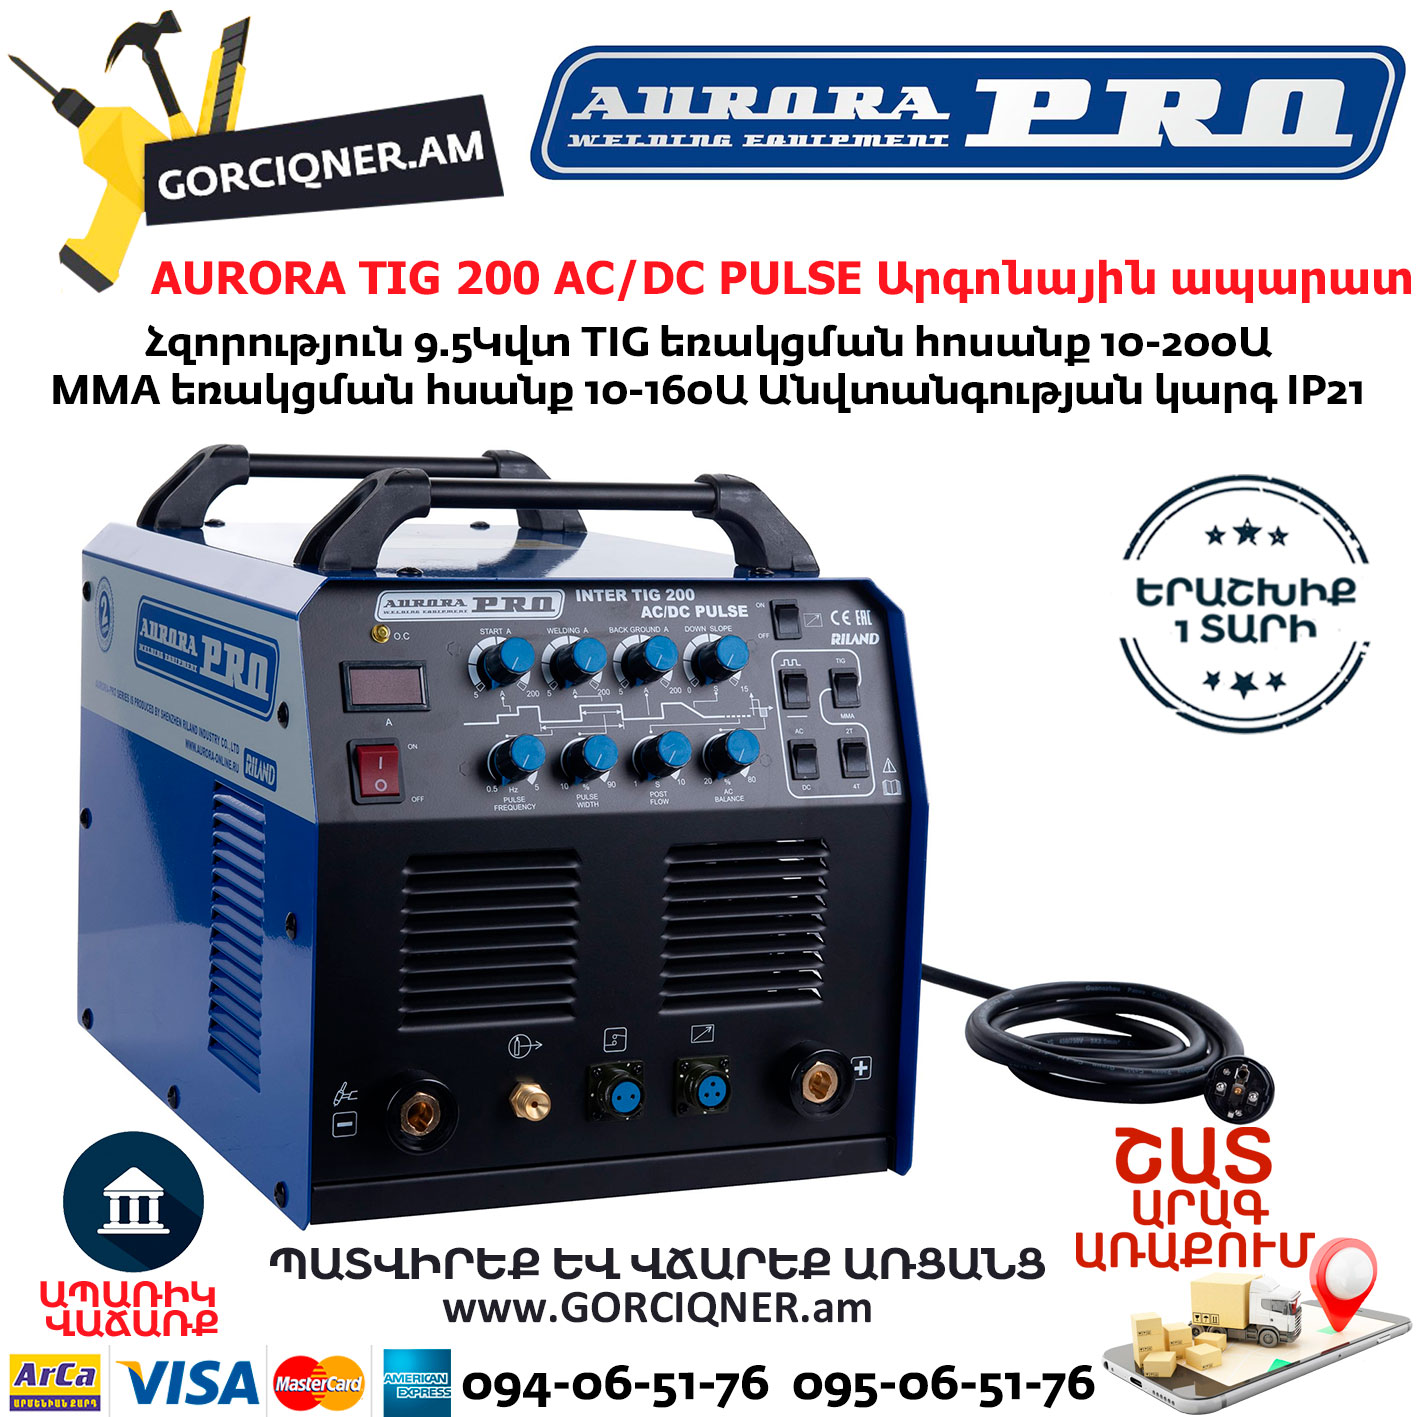 Aurora pro inter 200 pulse. Aurora Pro Inter Tig 200 AC/DC Pulse. Inter Tig 200 AC DC.